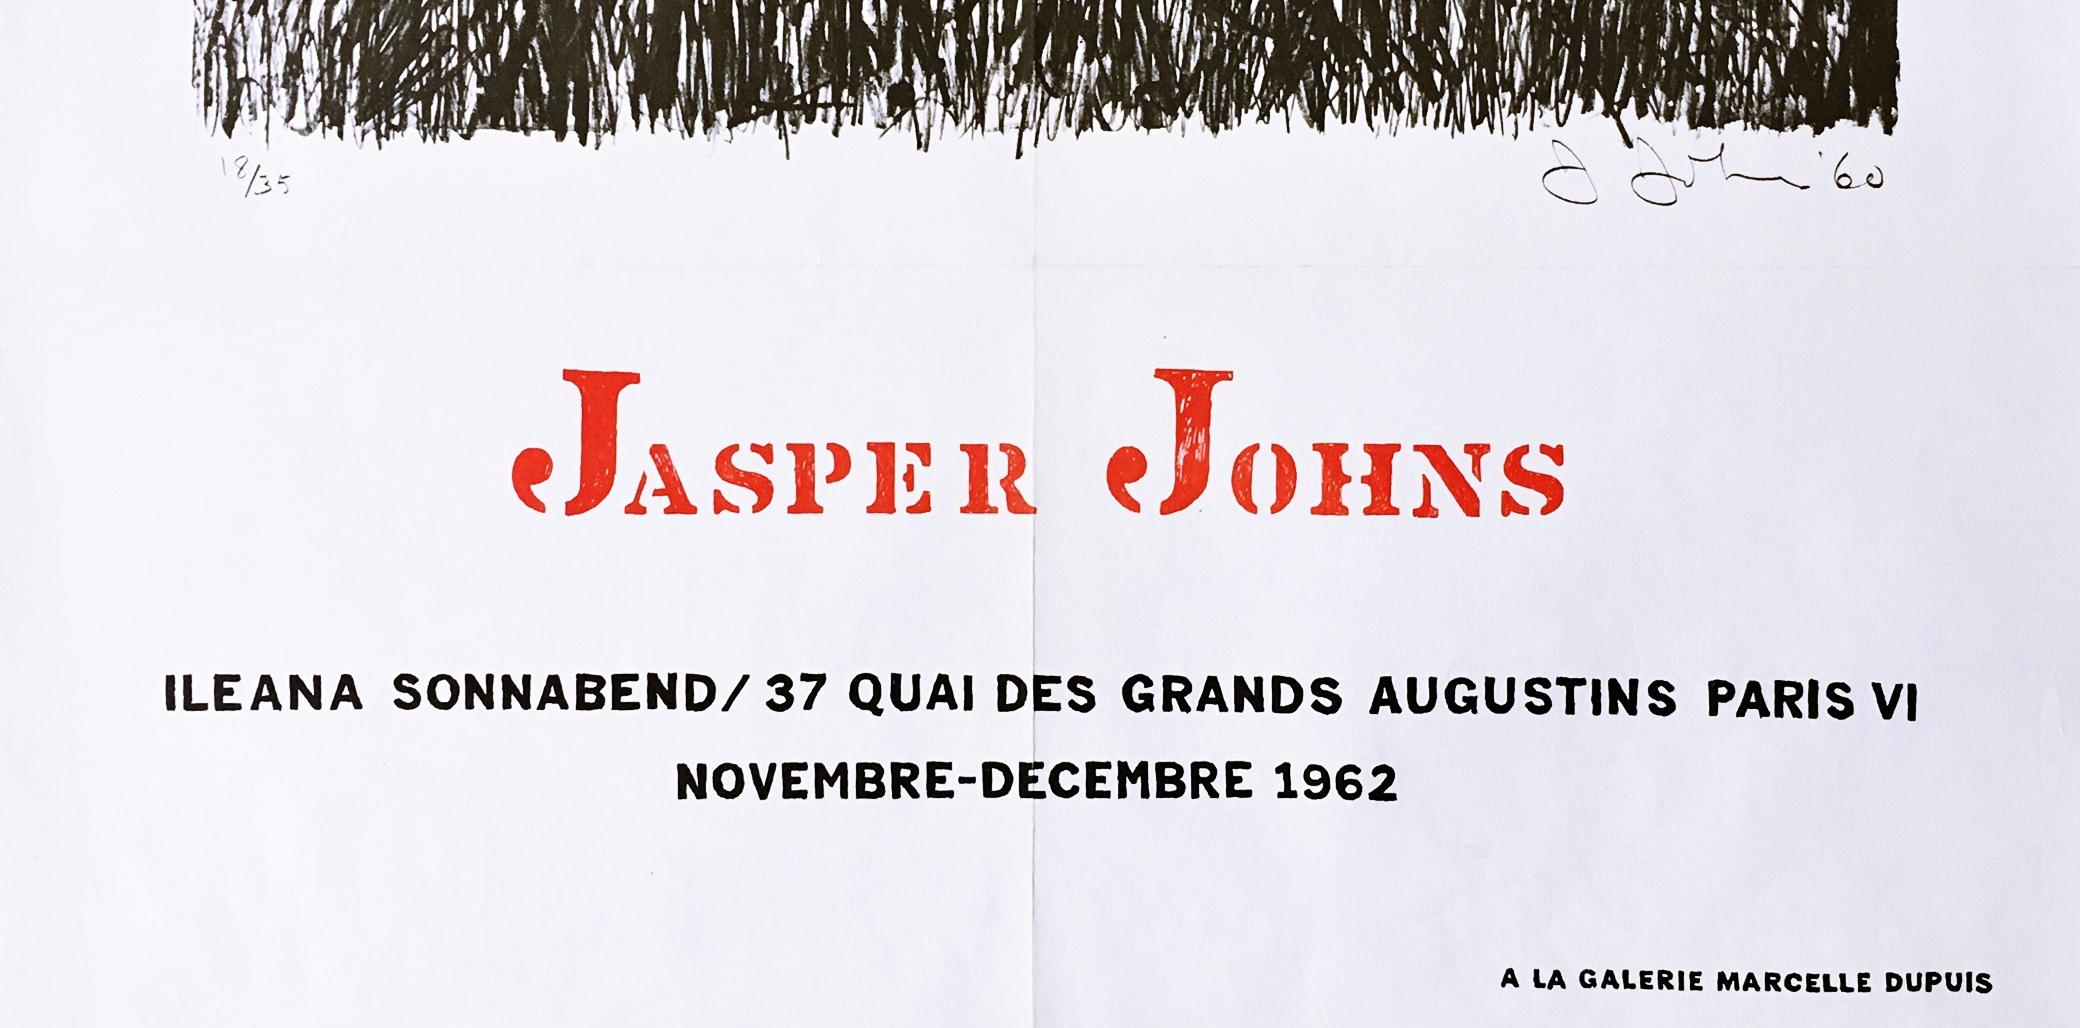 Jasper Johns at Ileana Sonnabend (rare early mid century modern European poster) For Sale 3